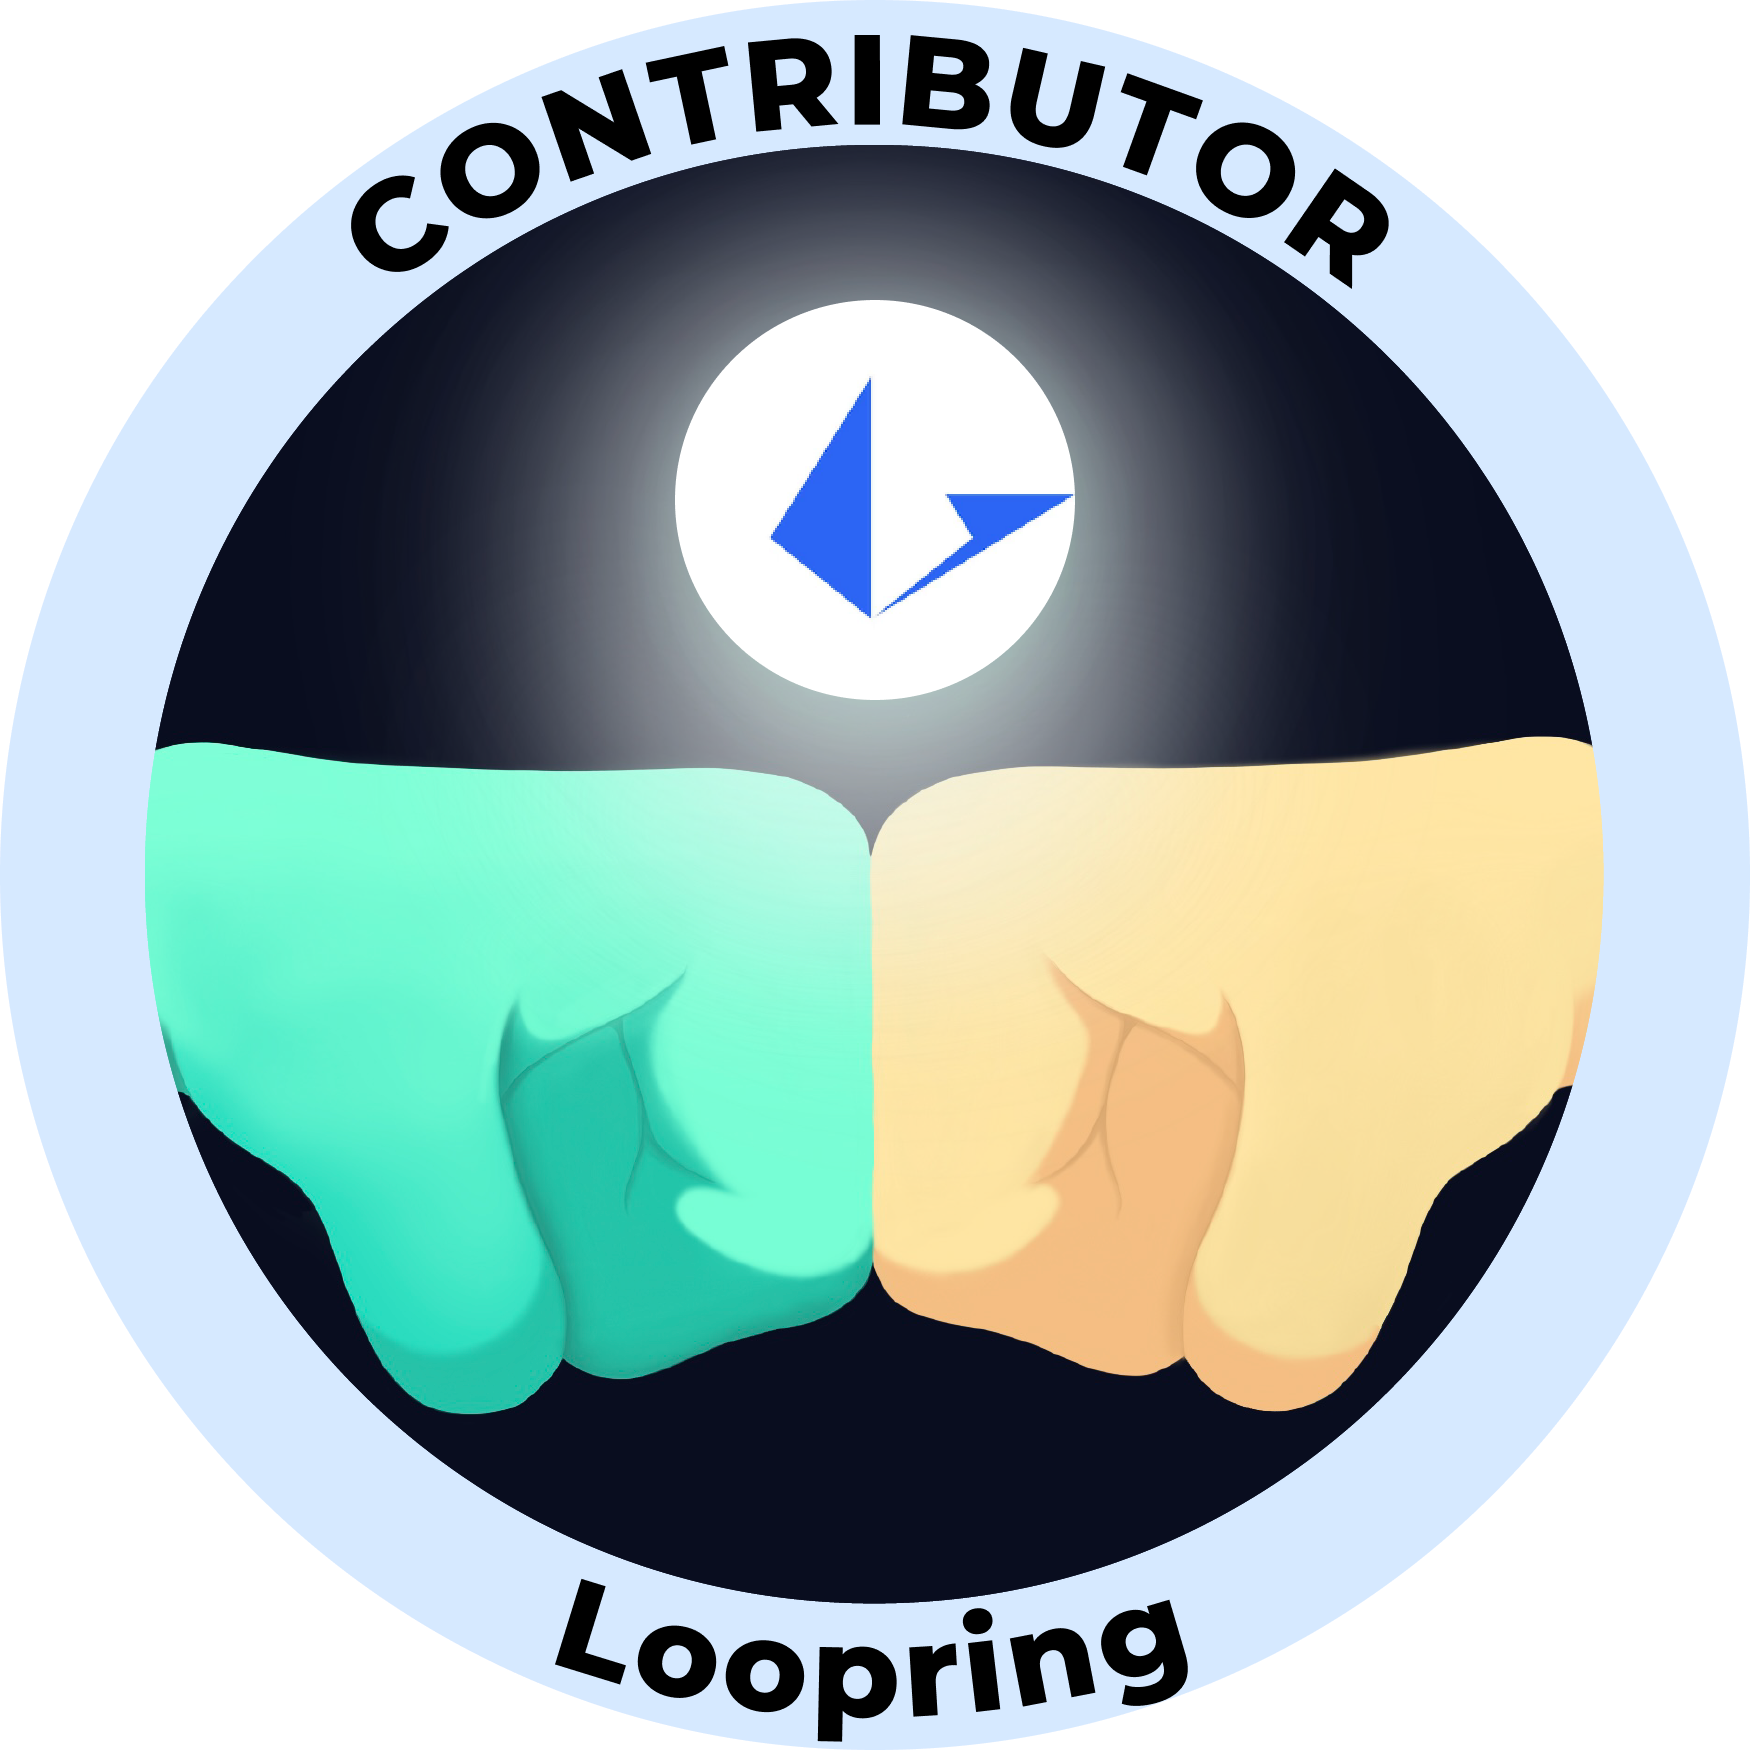 Web3 Badge | Organization Contributor: Loopring Protocol